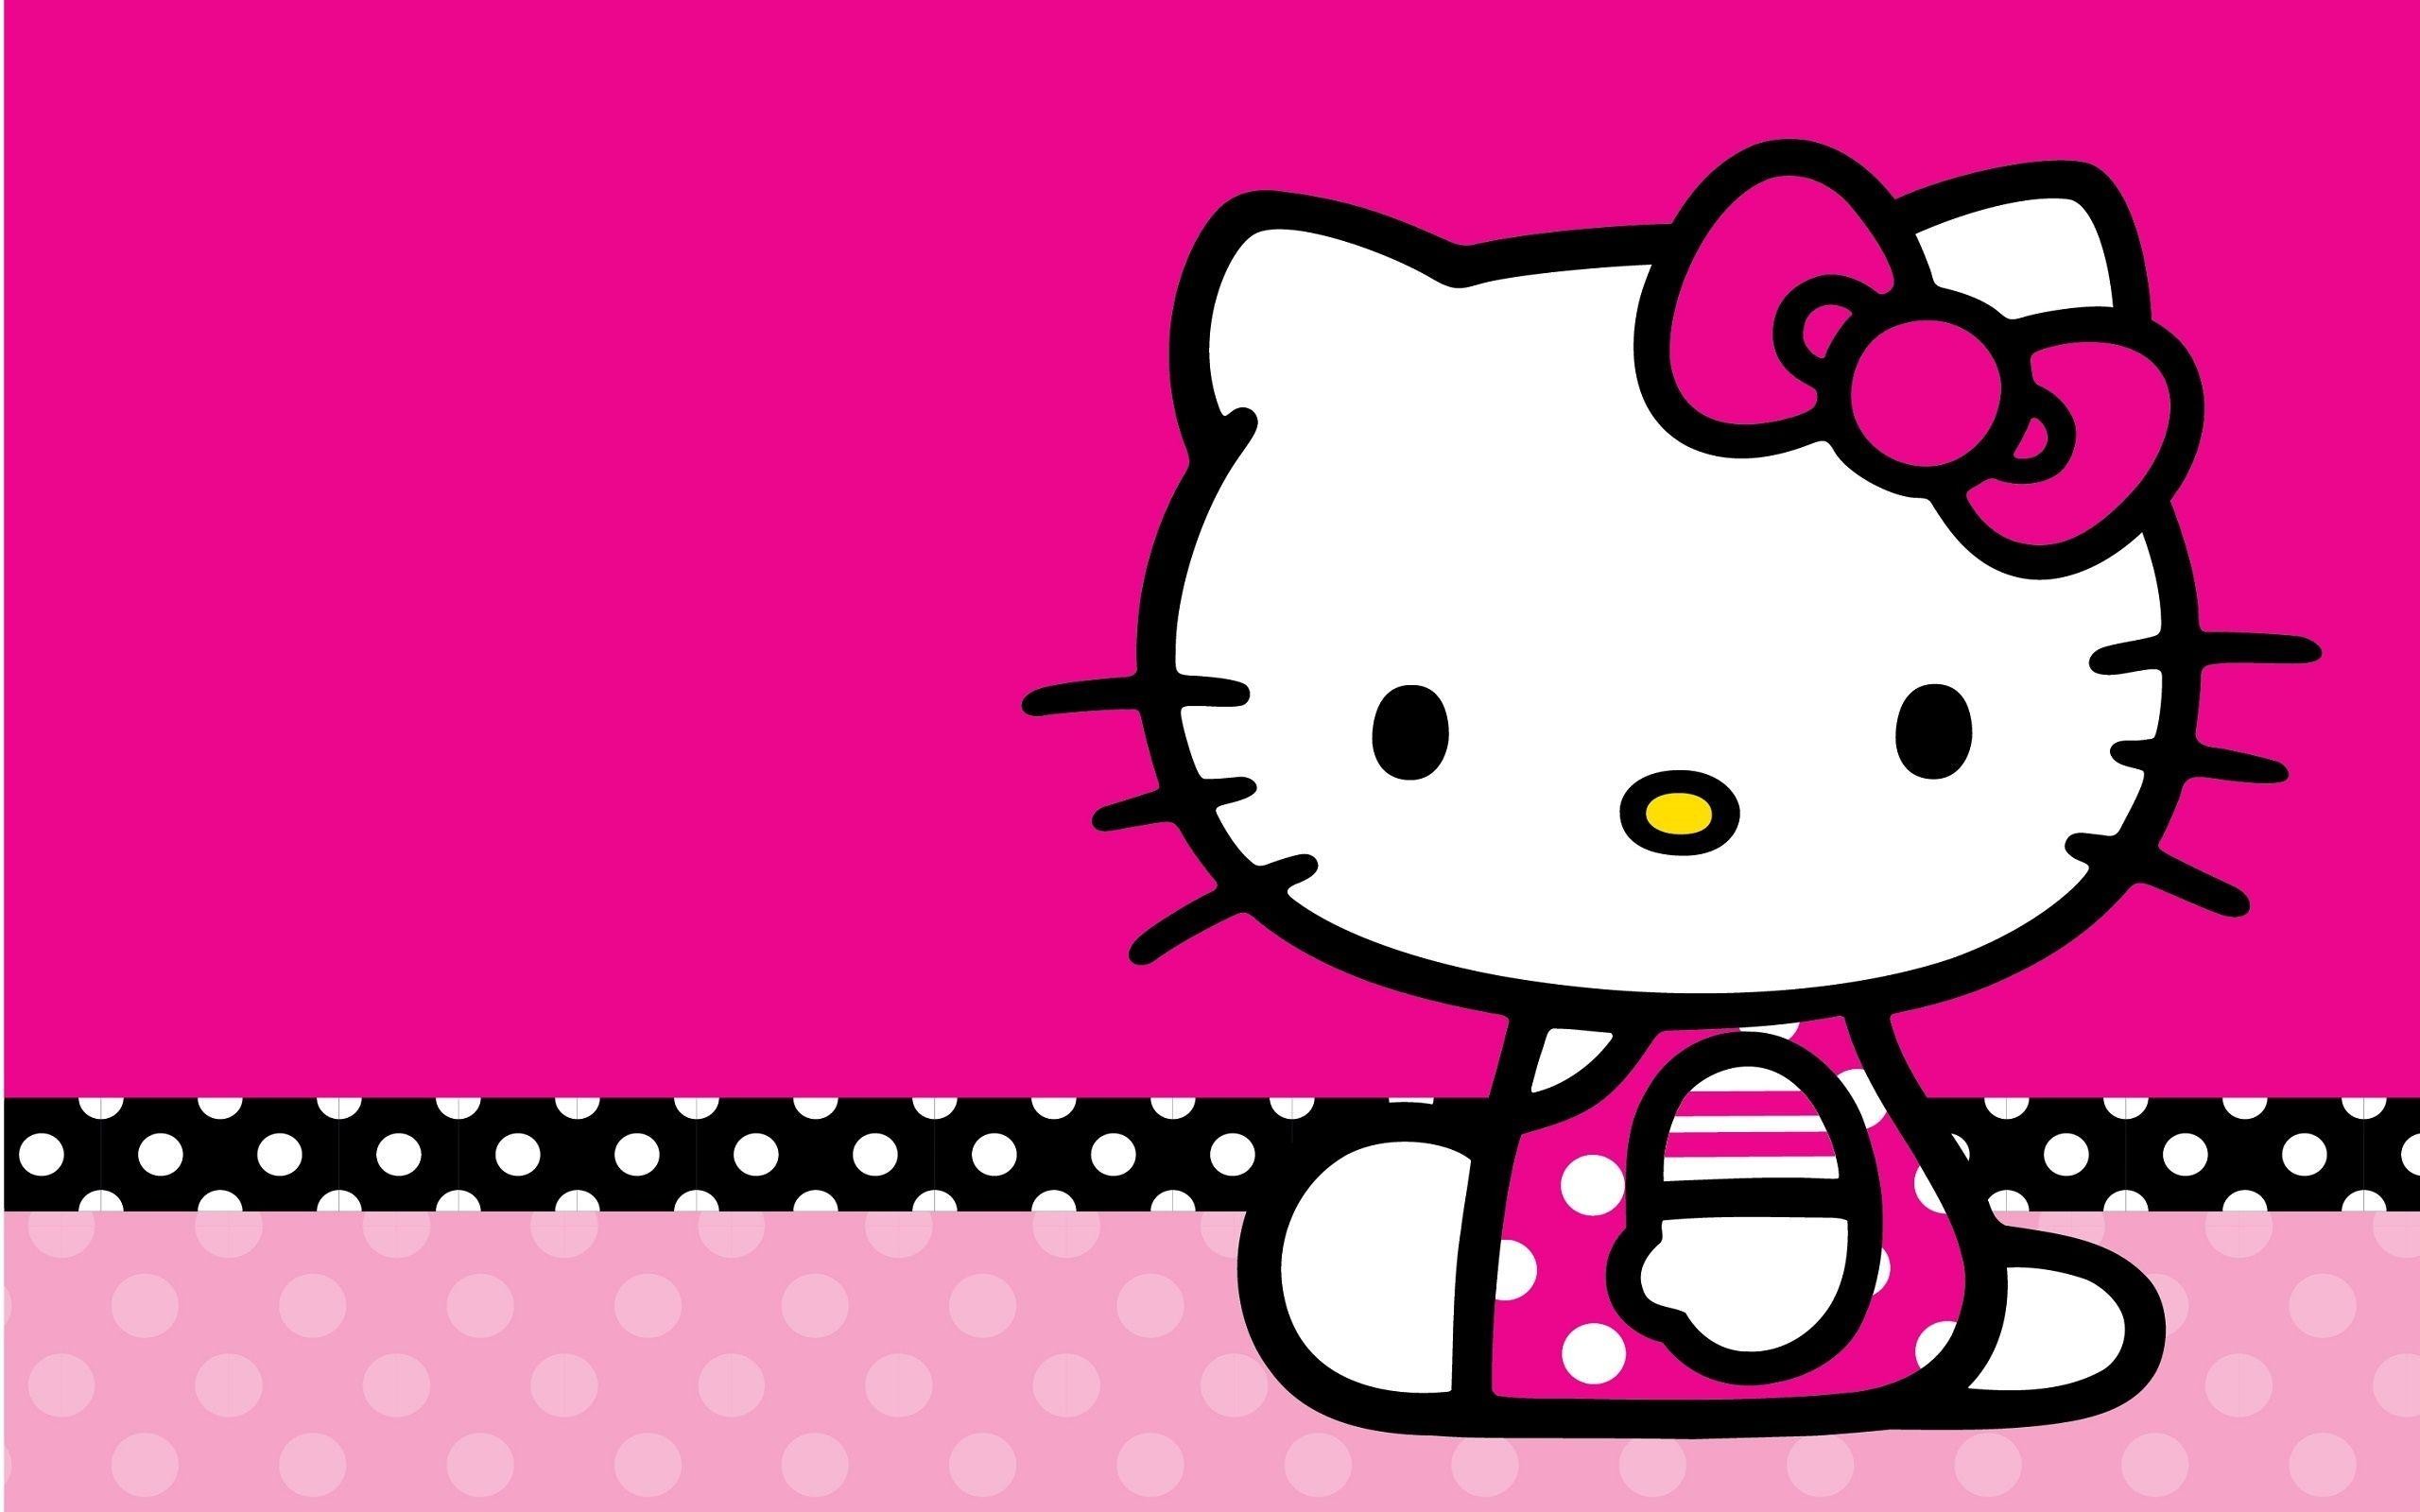 Baby Hello Kitty Wallpaper Image